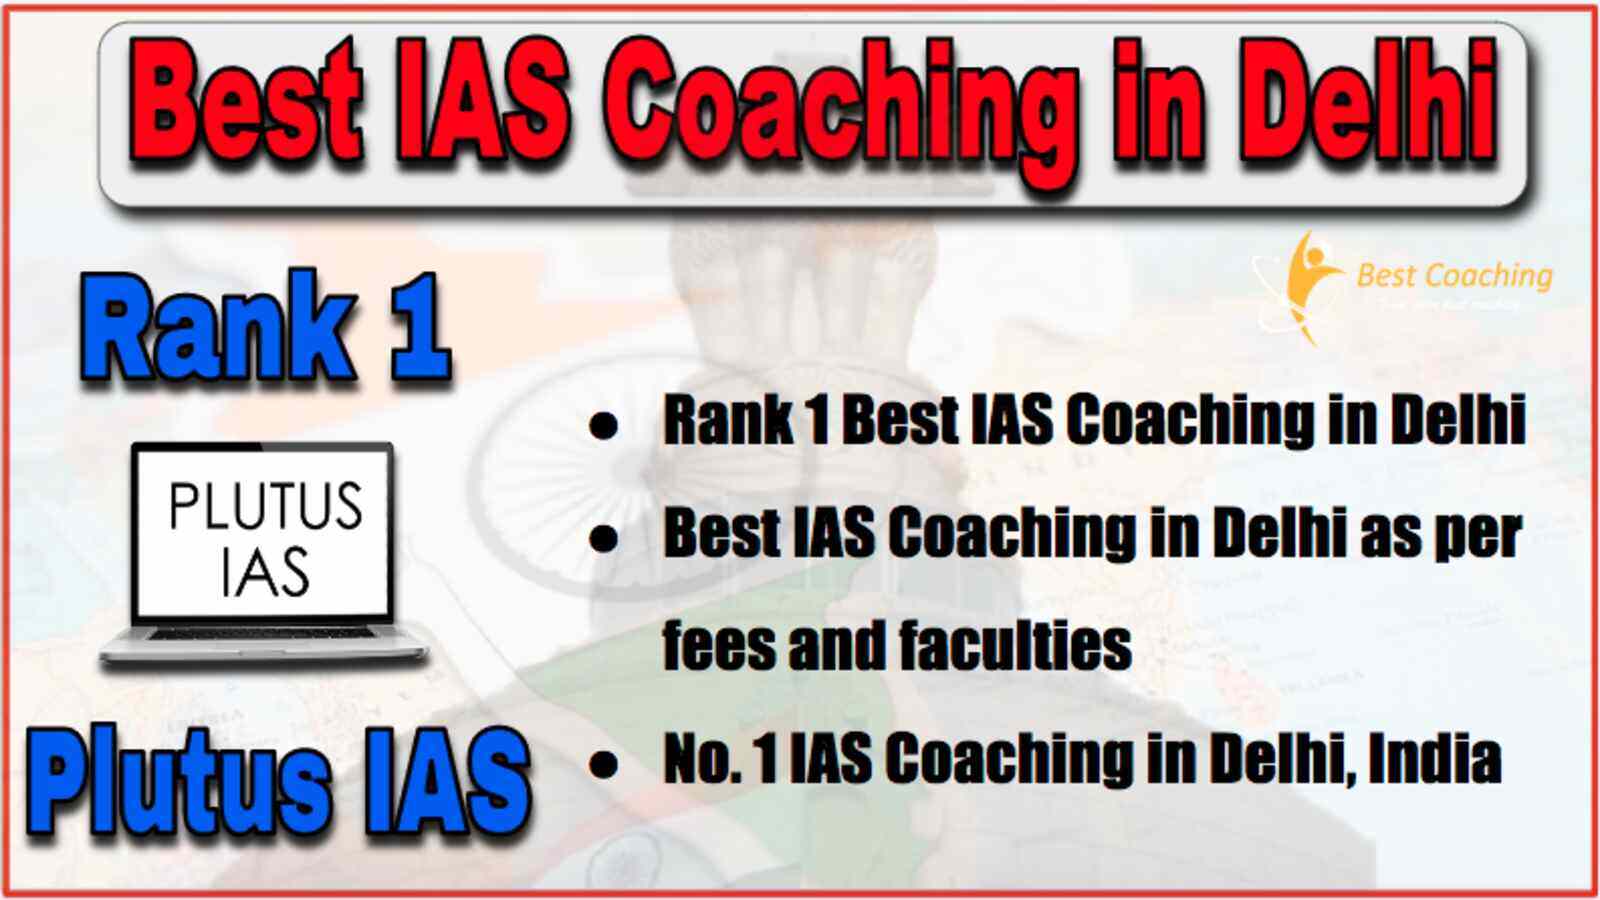 Best IAS Coaching in Delhi. 1st IAS Coaching in Delhi